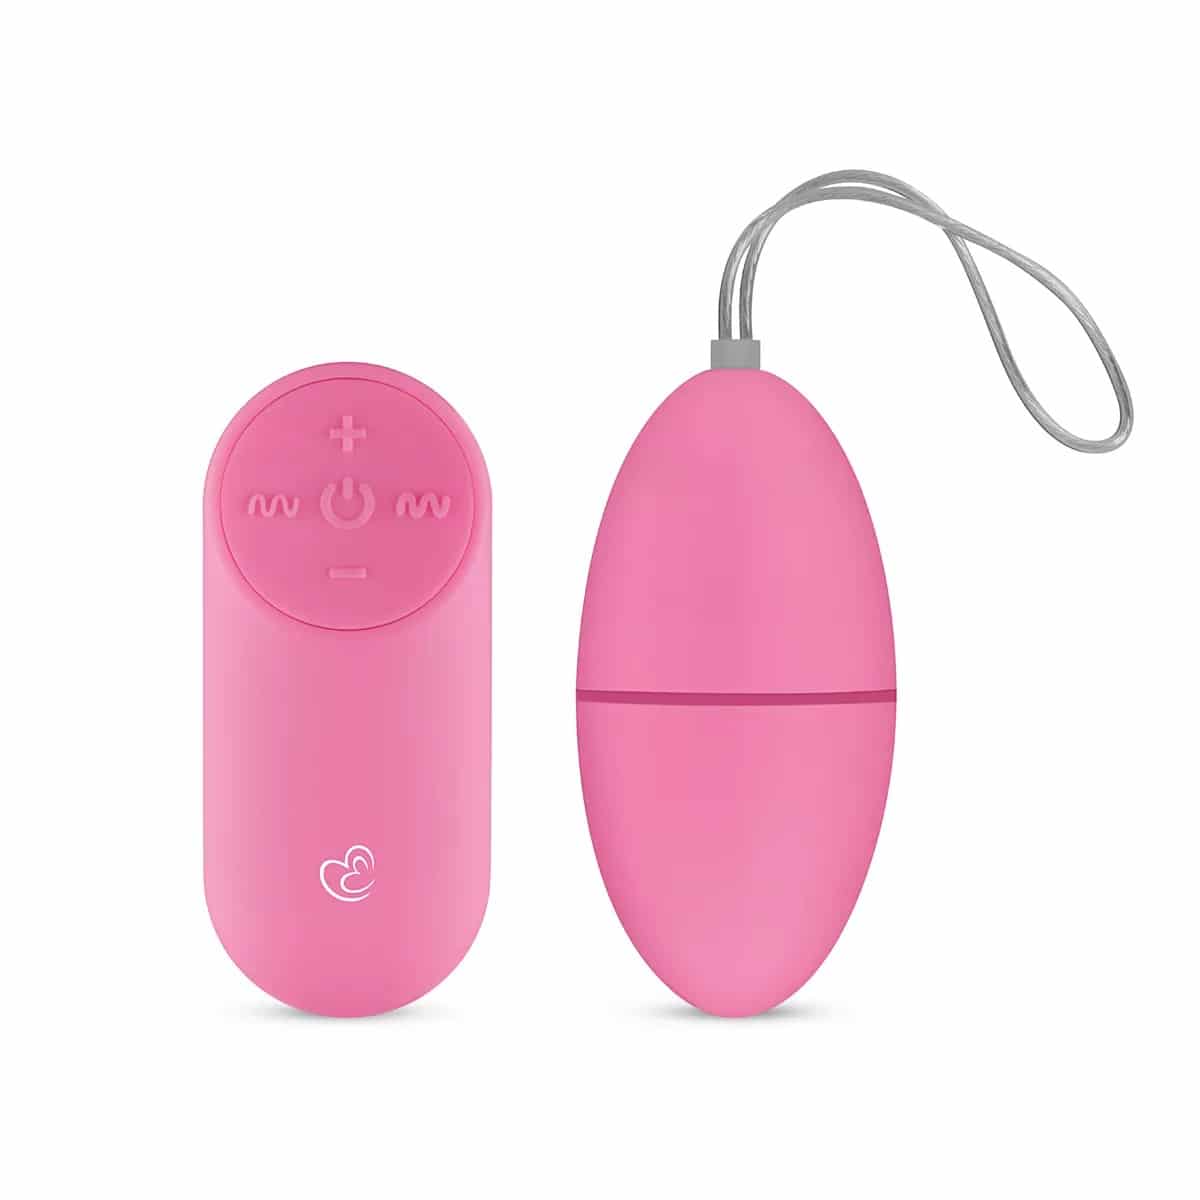 Liebeskugeln mit Vibration - Vibro-Ei in Pink